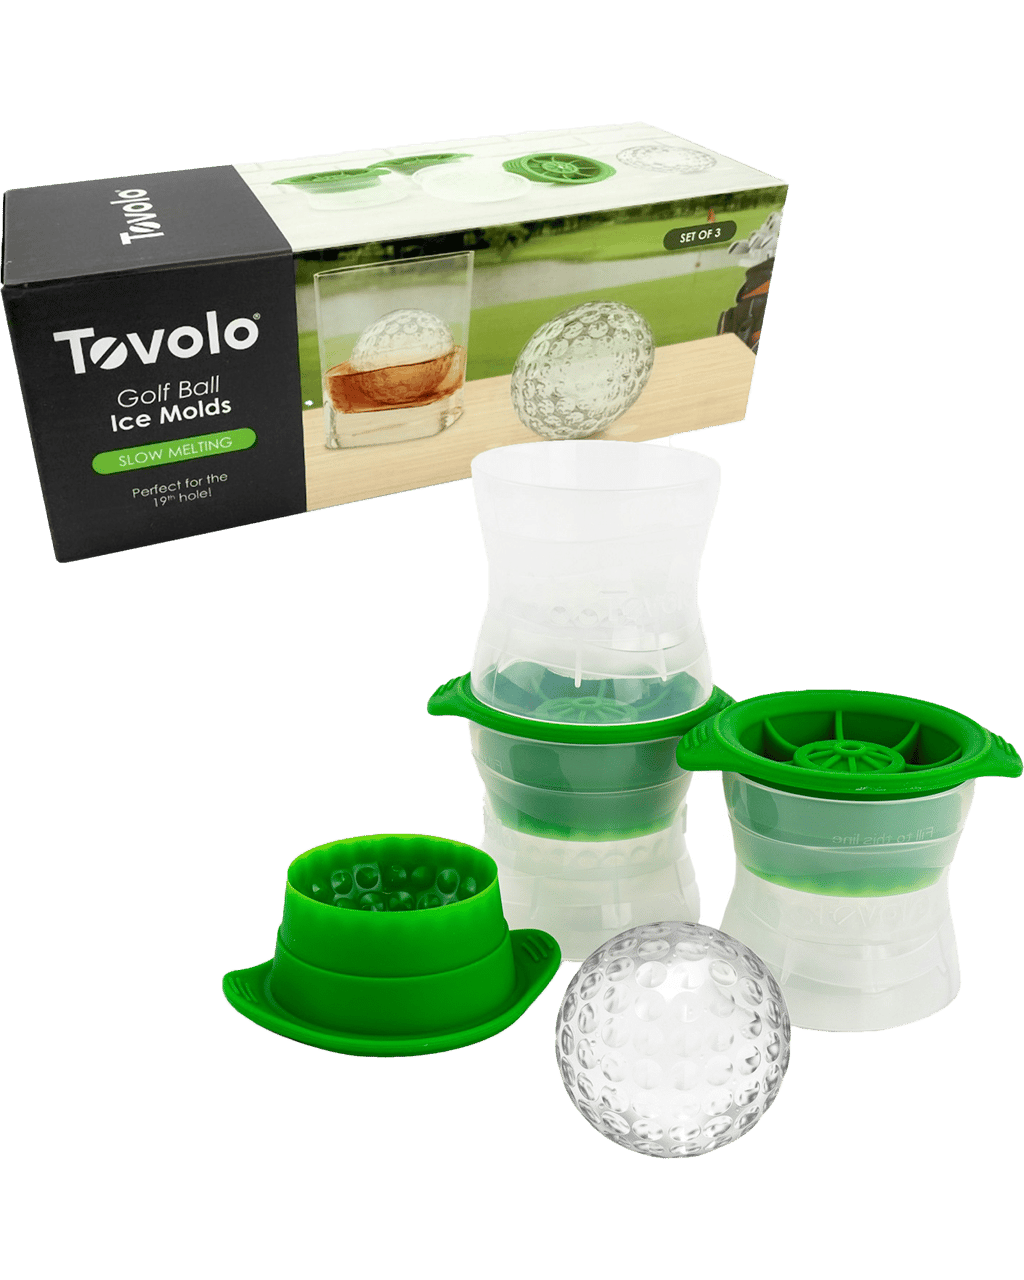 Tovolo Golf Ball Ice Molds, Set of 2